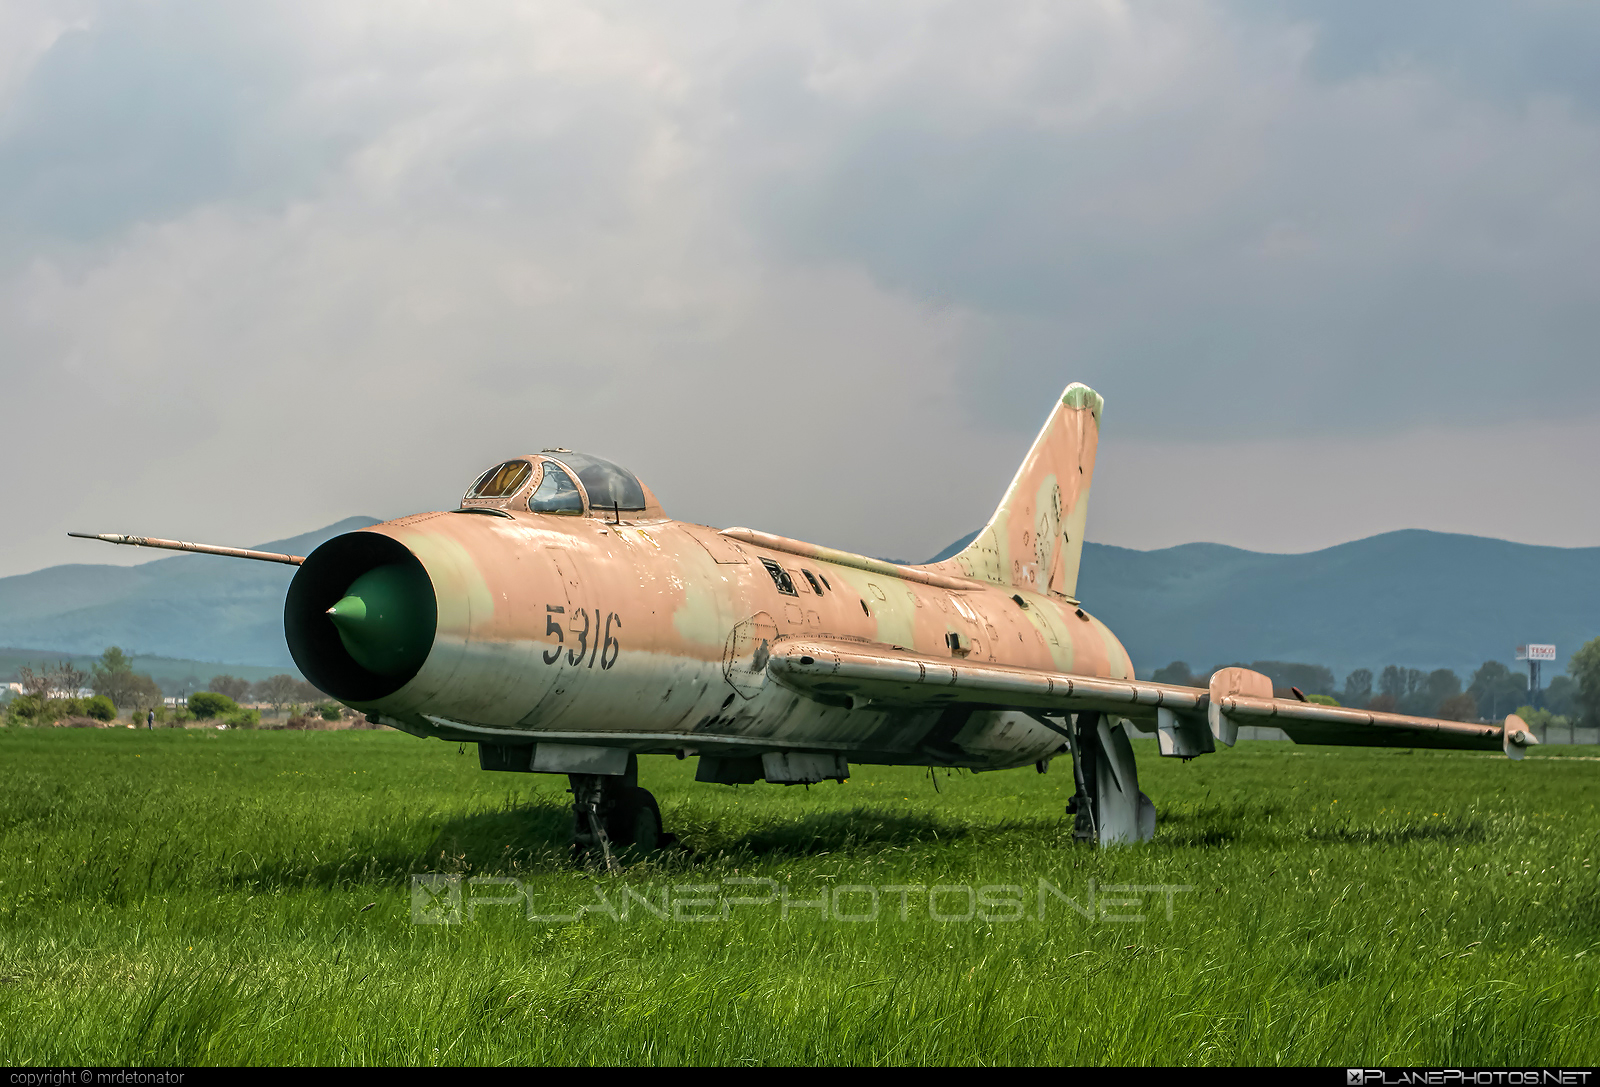 Sukhoi Su-7BM - 5316 operated by Letectvo ČSĽA (Czechoslovak Air Force) #czechoslovakairforce #letectvocsla #sukhoi